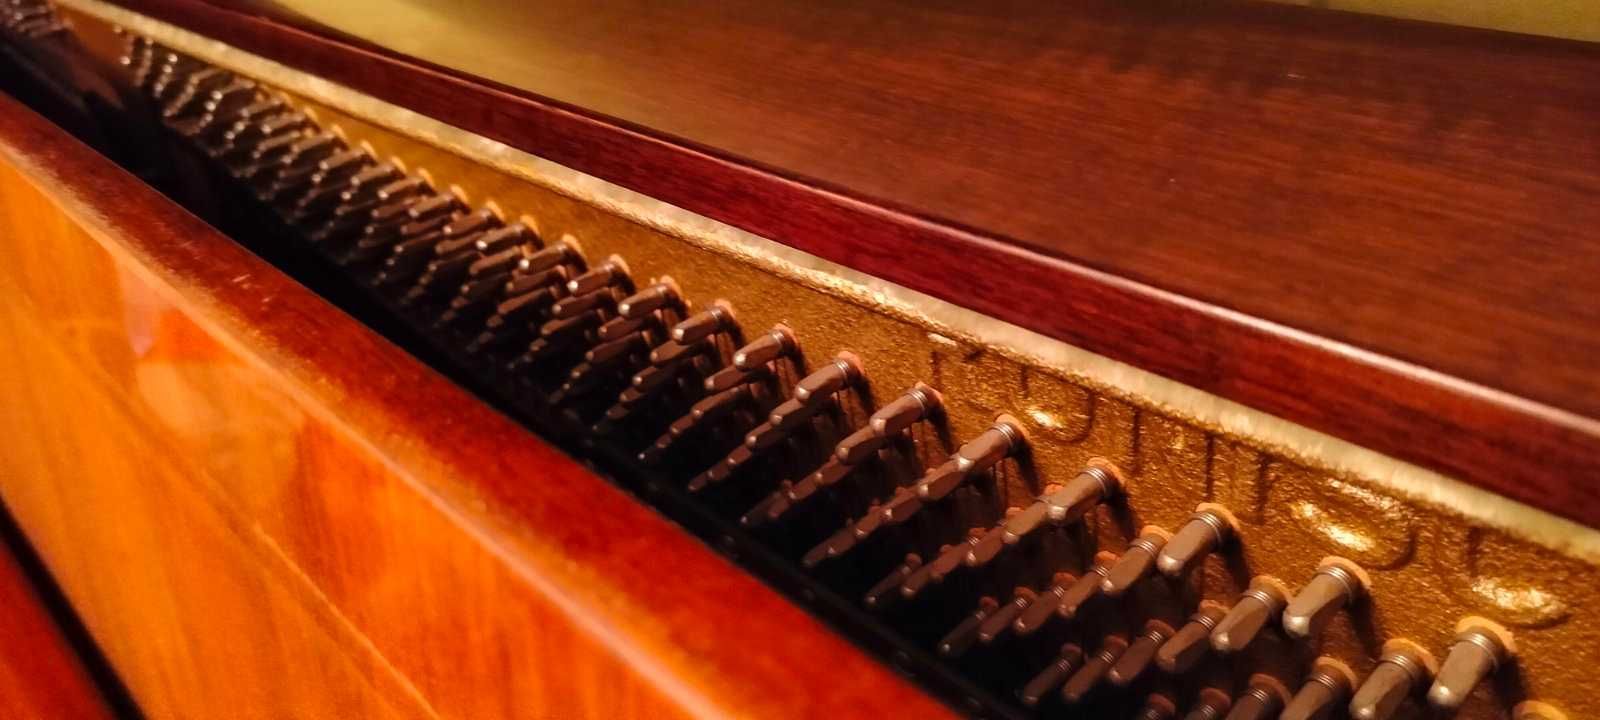 Пианино Ronisch de Luxe, Кабинетный.